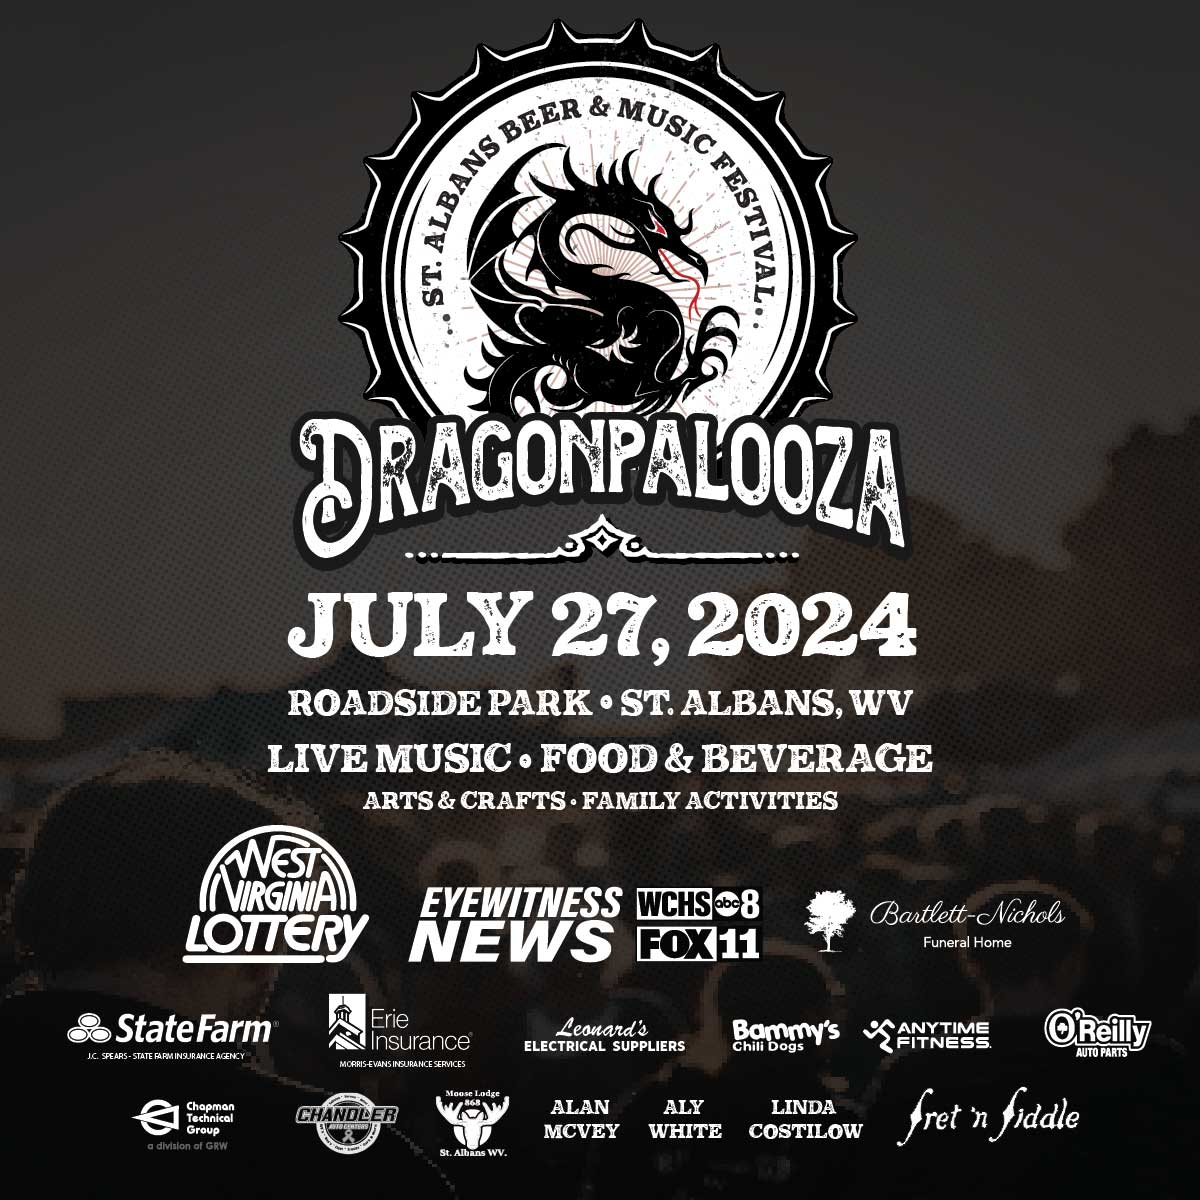 Dragonpalooza-St. AlbansBeer & Music Festival - July 27, 2024 - Roadside Park